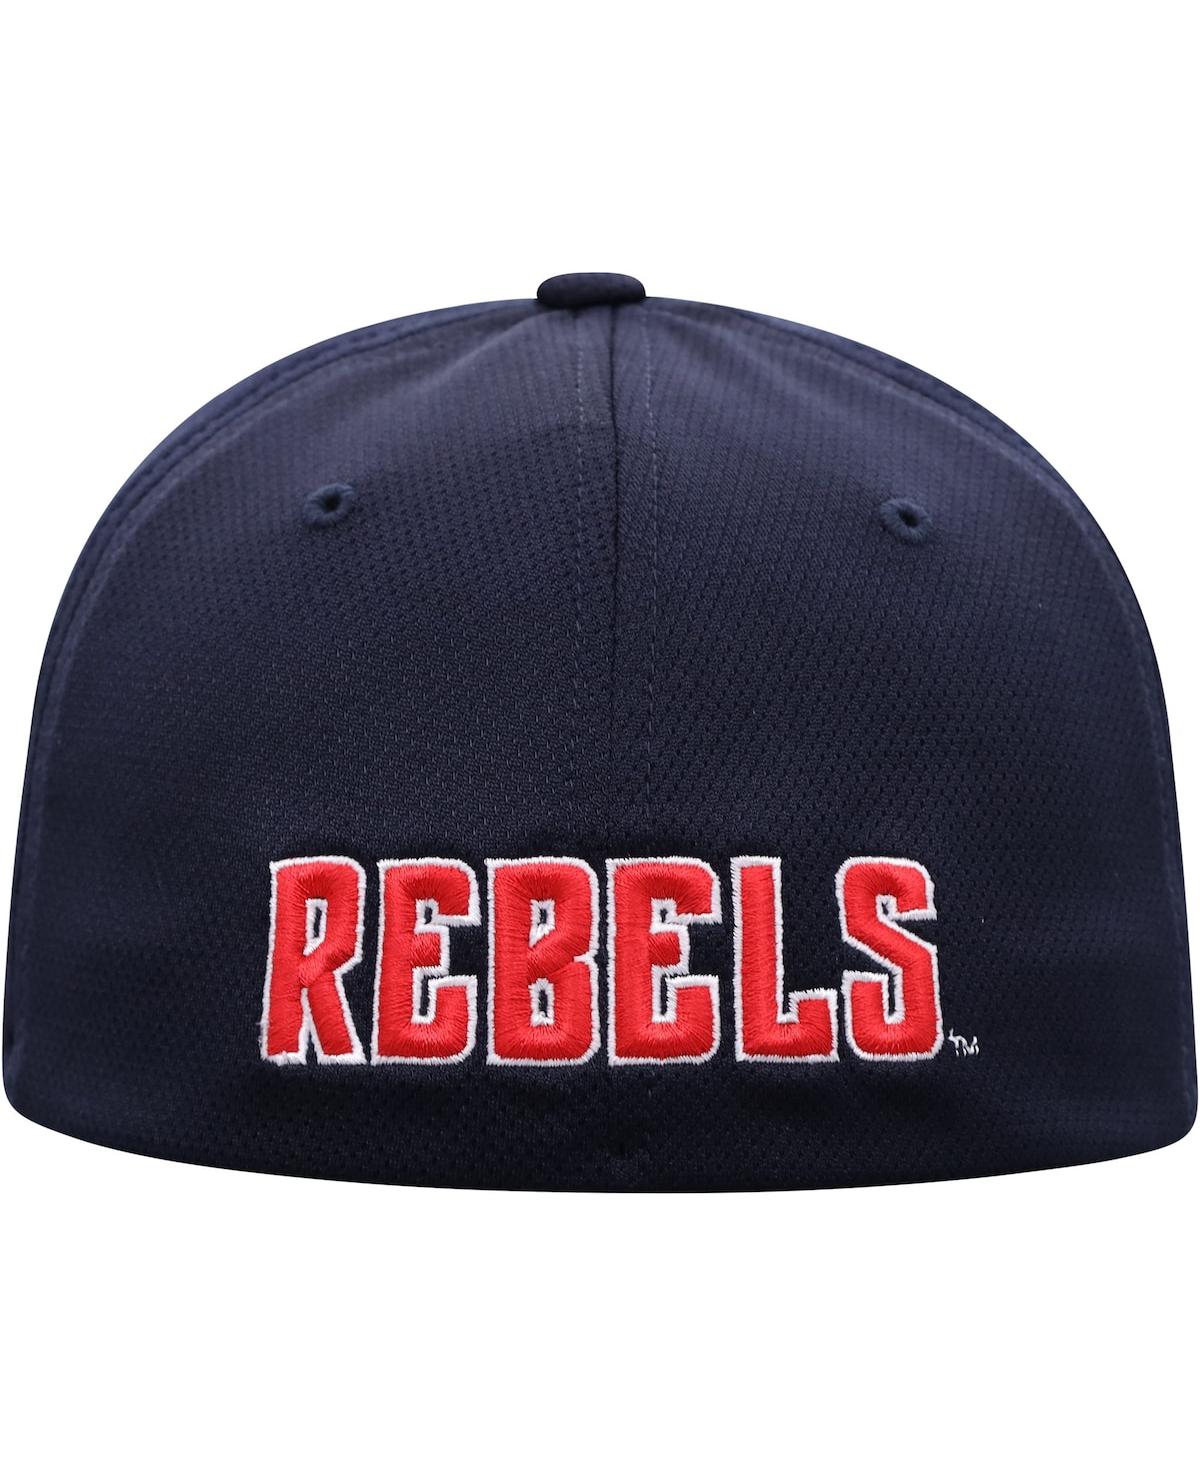 Shop Top Of The World Men's  Navy Ole Miss Rebels Reflex Logo Flex Hat